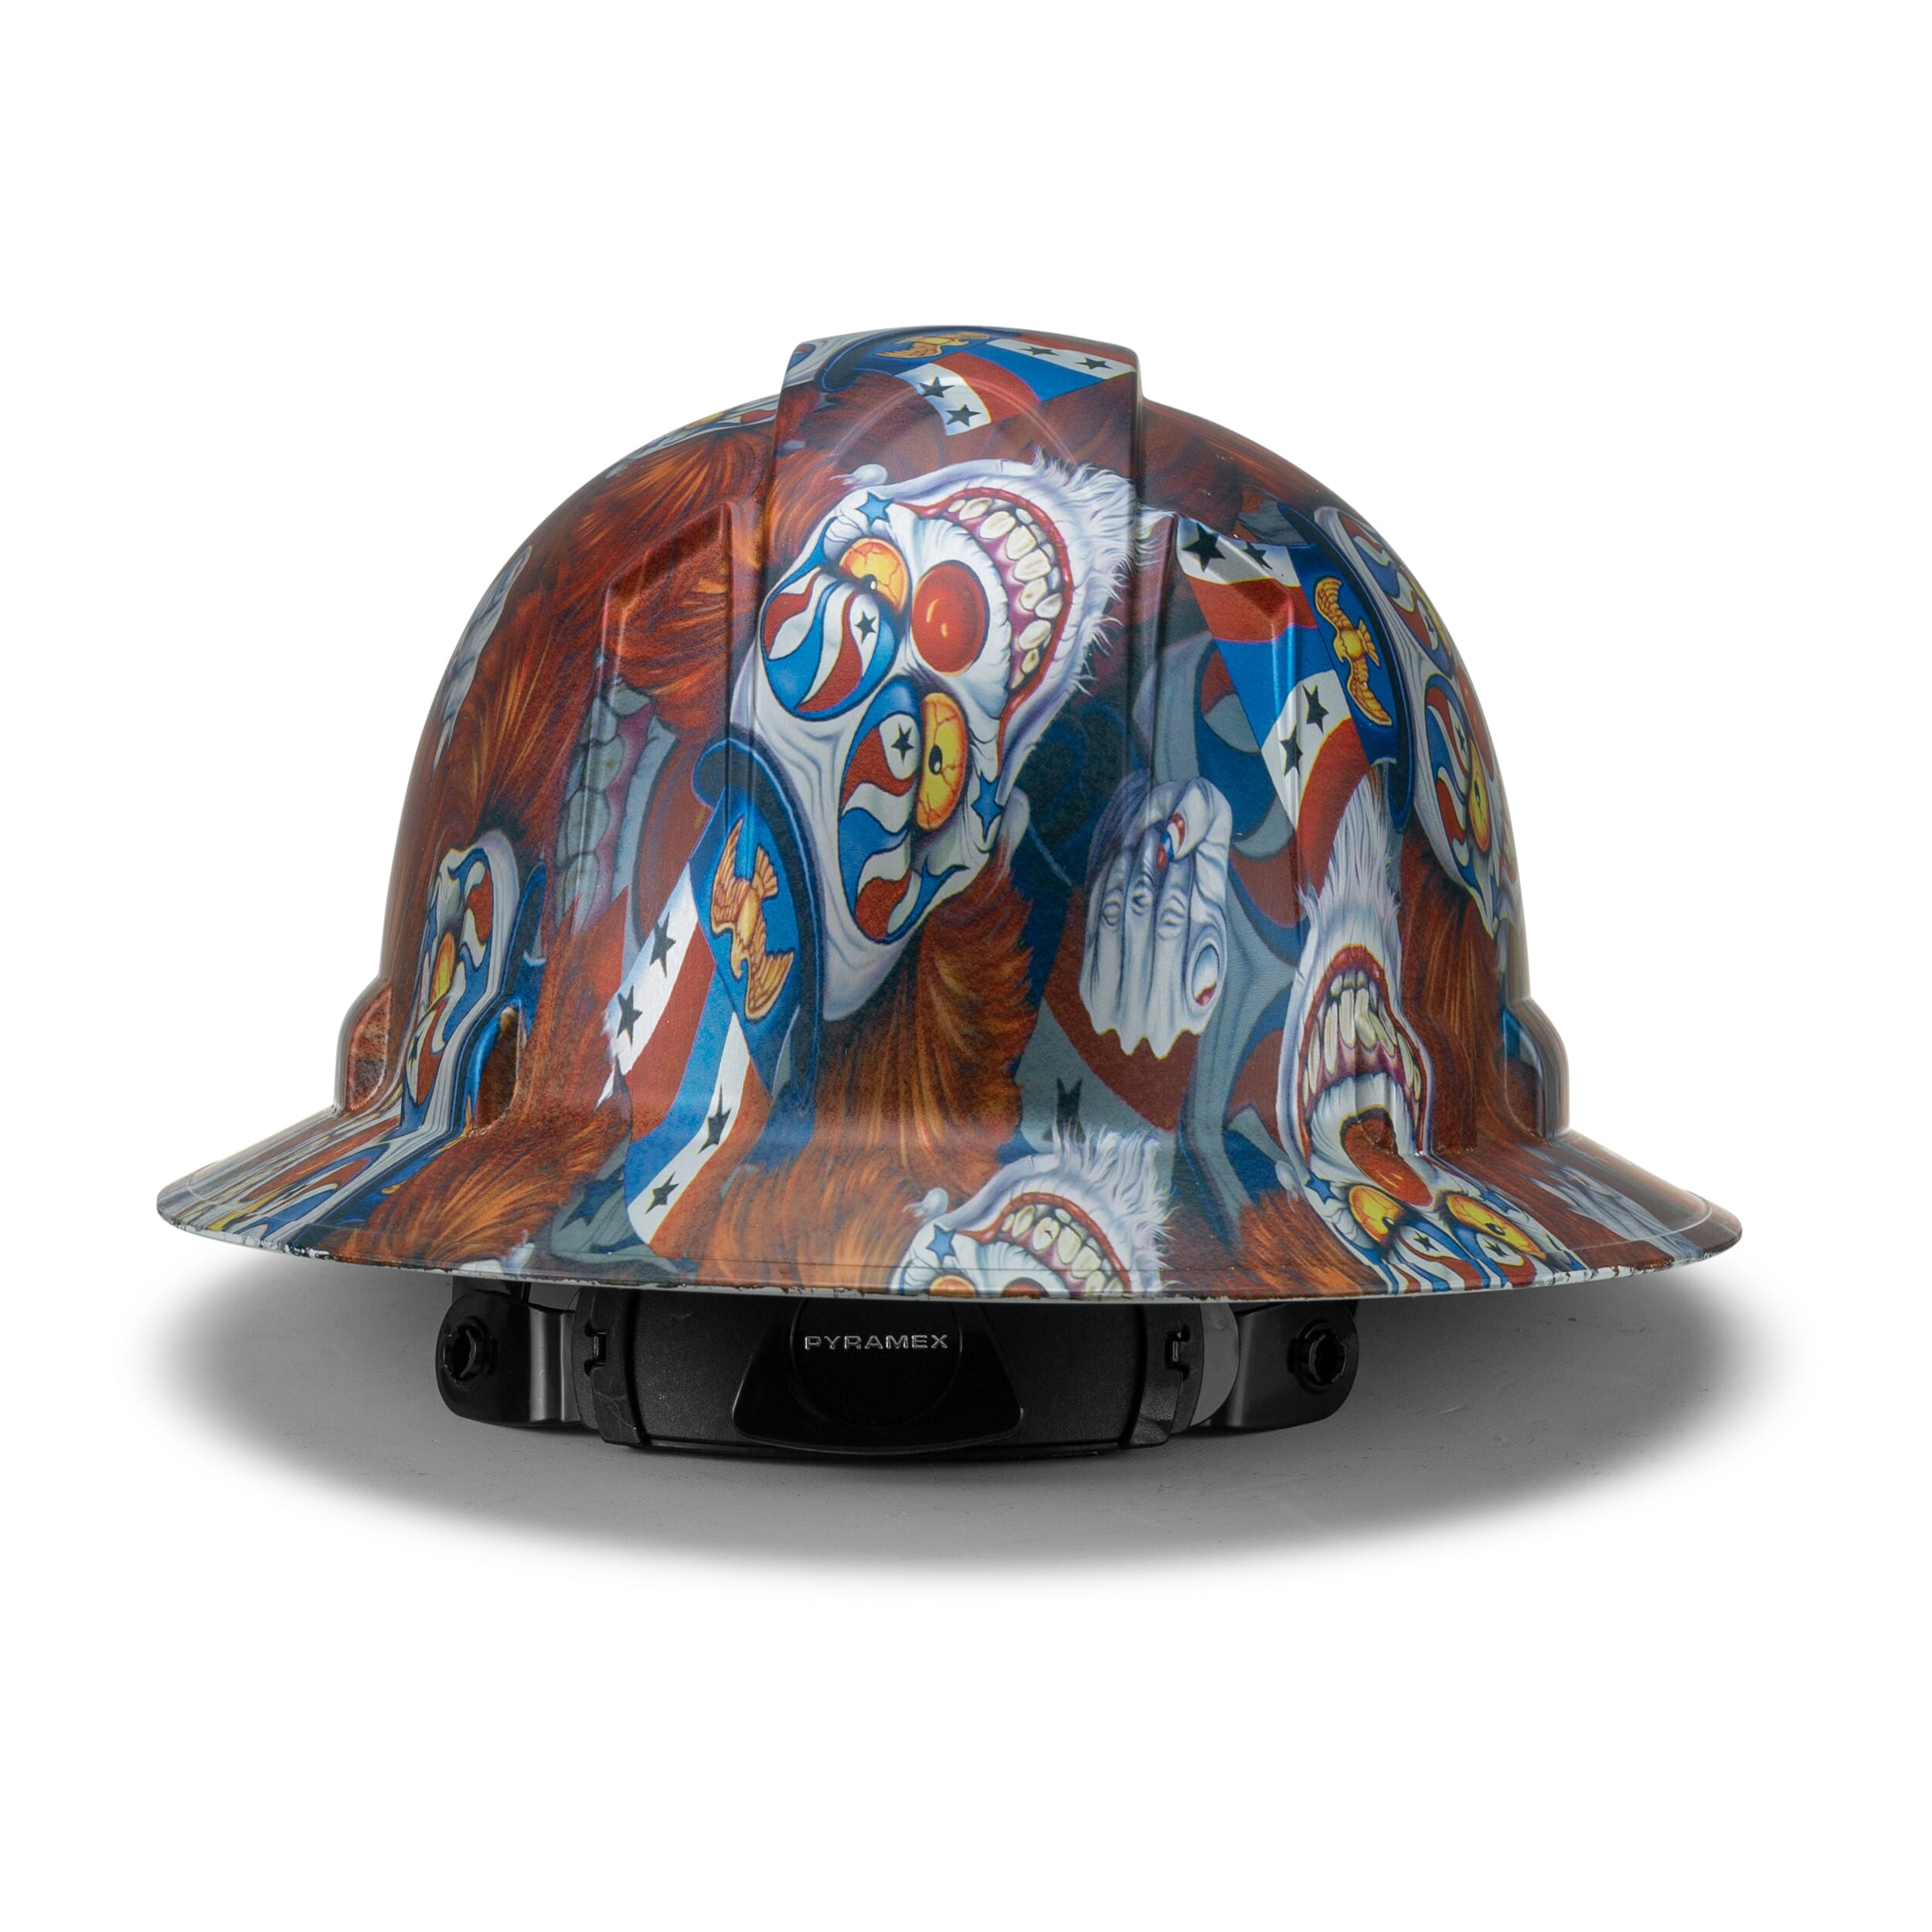 Full Brim Pyramex Hard Hat, Custom Three Ring Nightmare Design, Safety Helmet, 6 Point